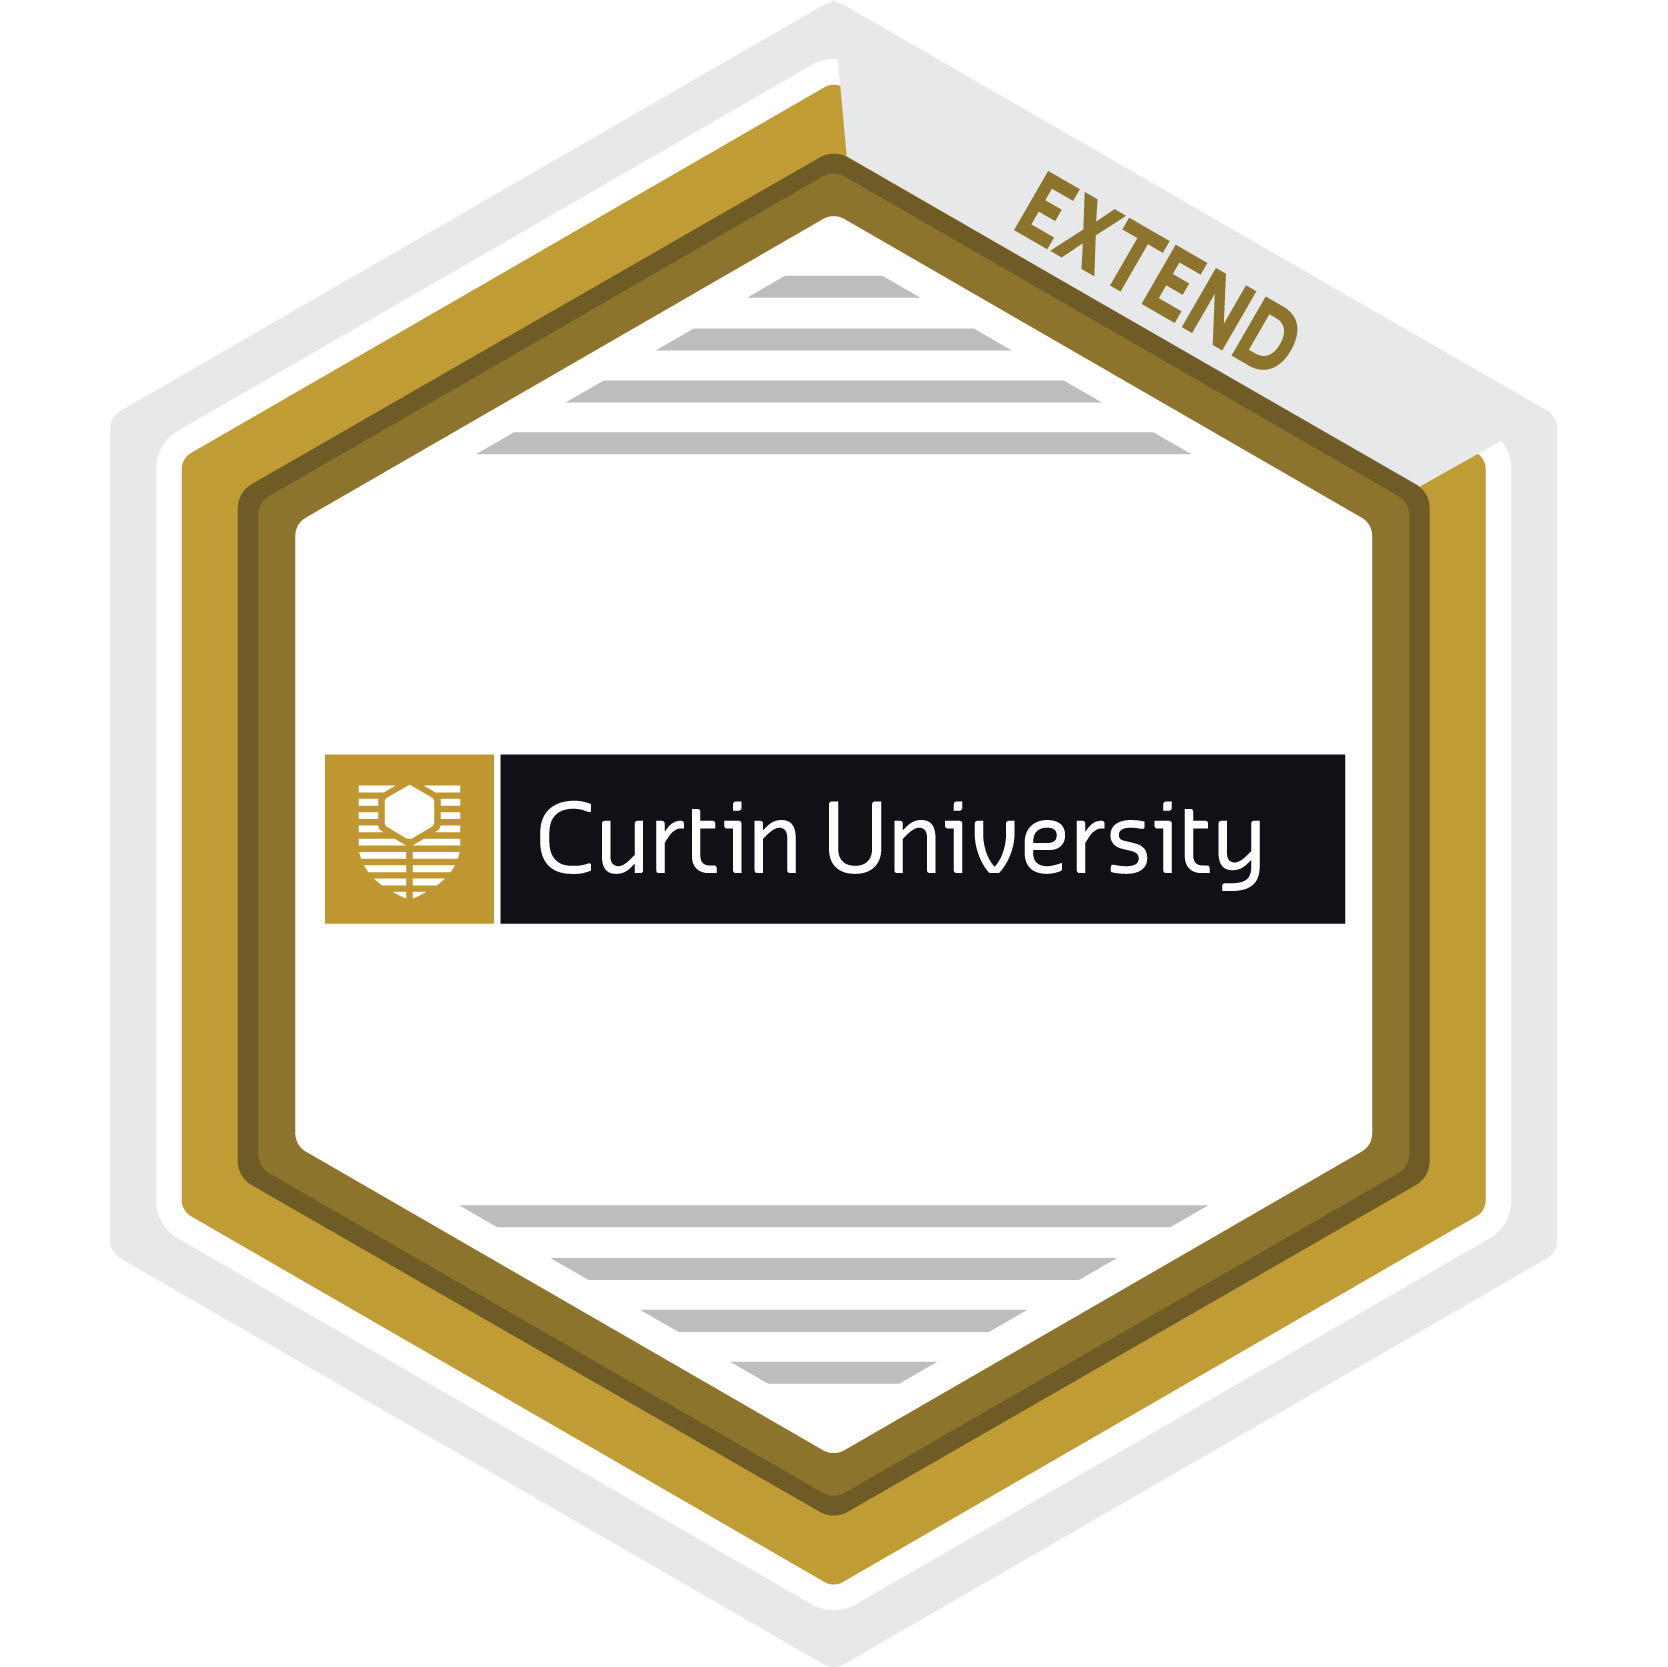 Curtin Extend Badge - Hexagon with curtin logo